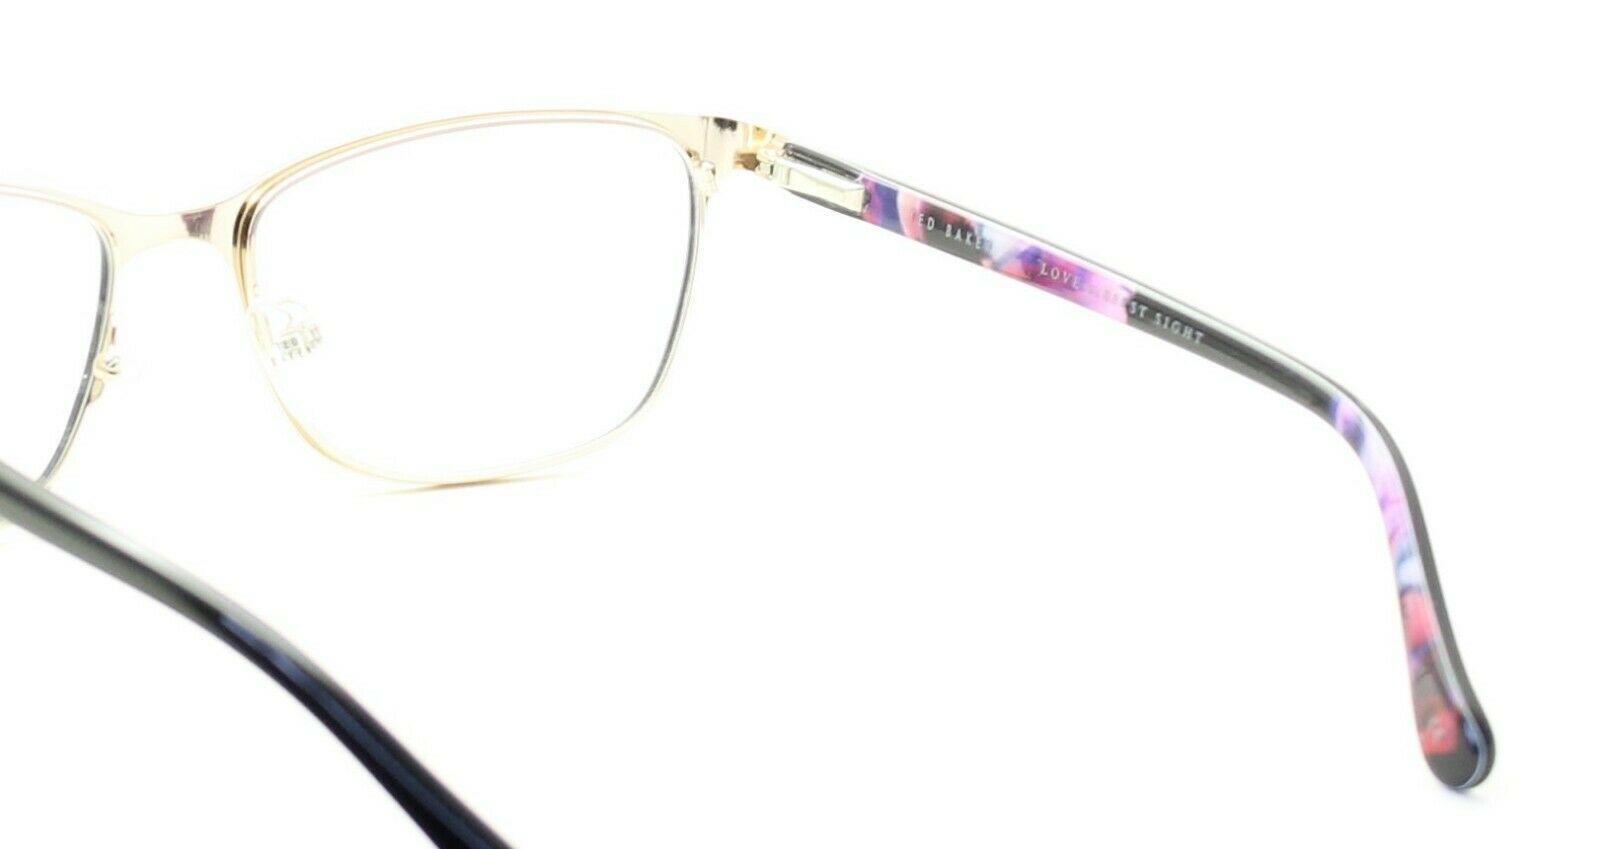 TED BAKER 2229 004 Bree 54mm Eyewear FRAMES Glasses RX Optical Eyeglasses - New